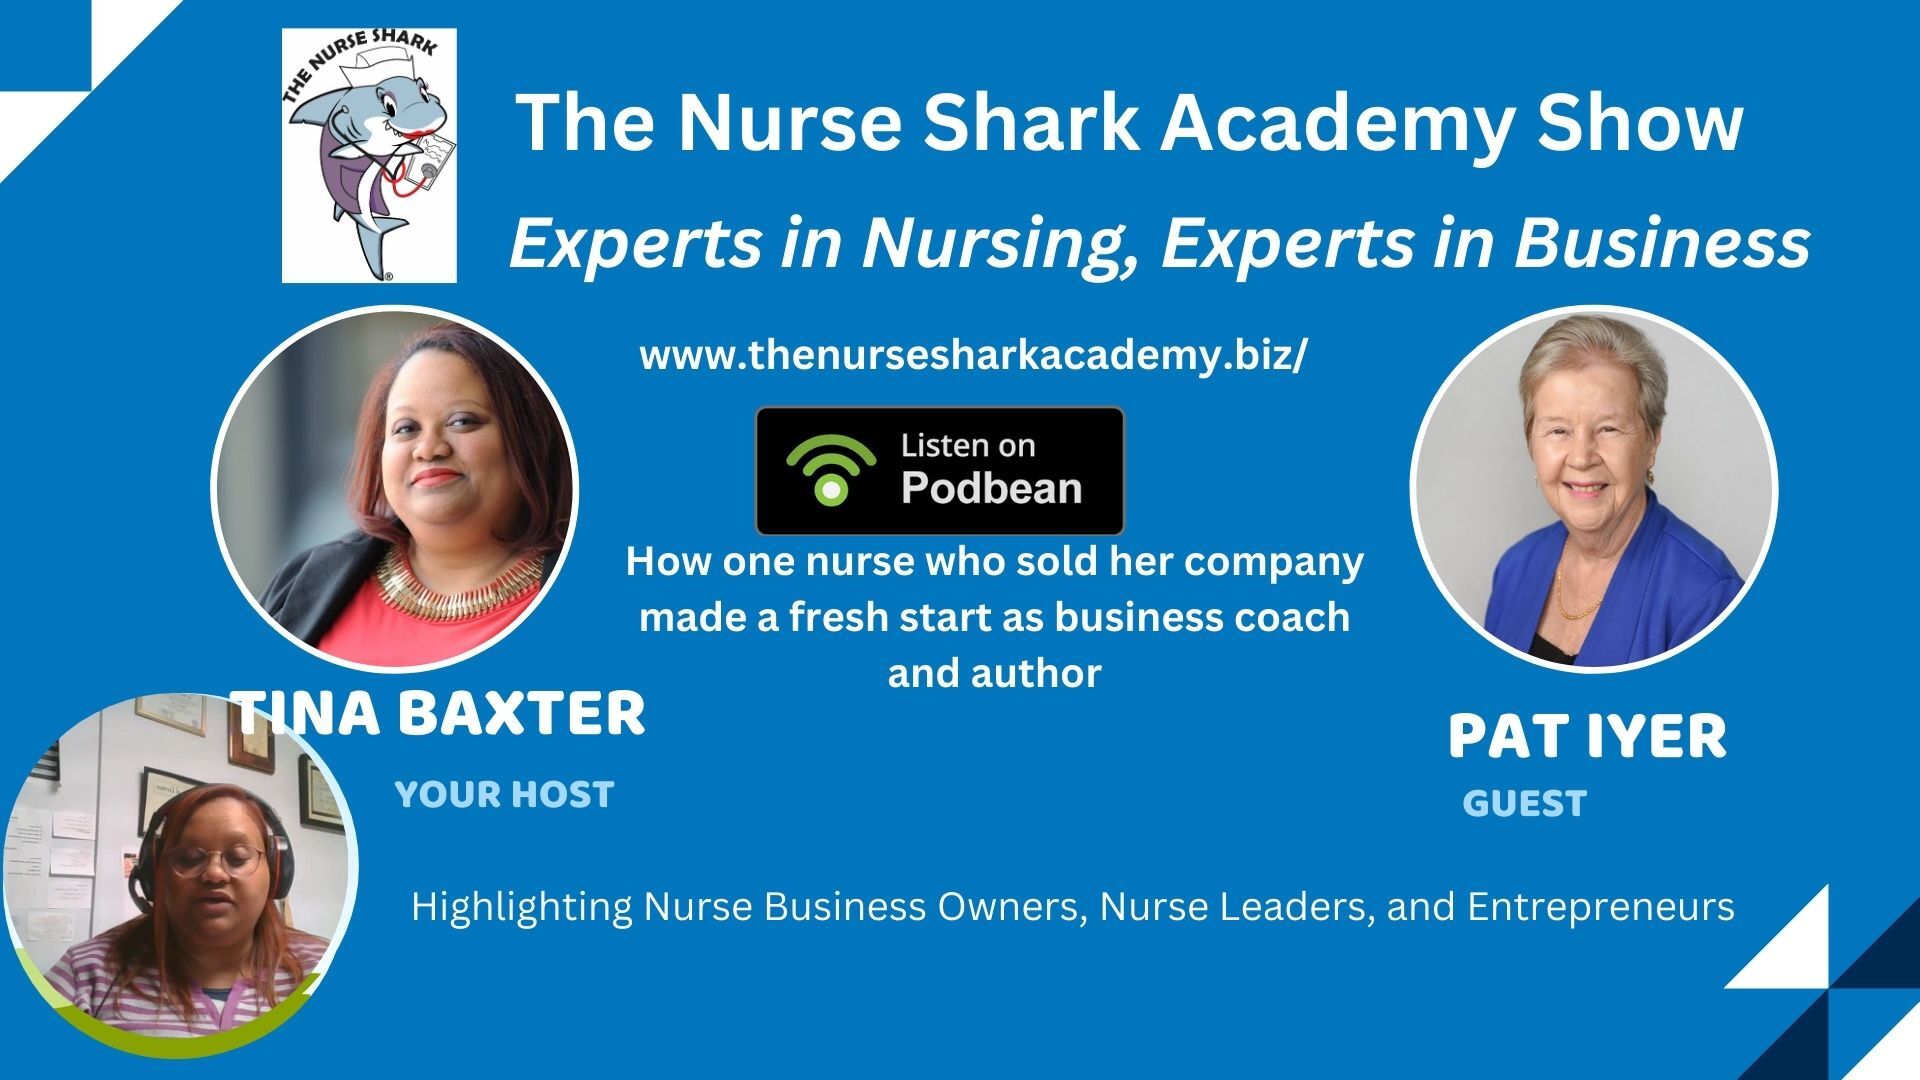 The_Nurse_Shark_Academy_Show_Pat_Iyer_Promo5y...